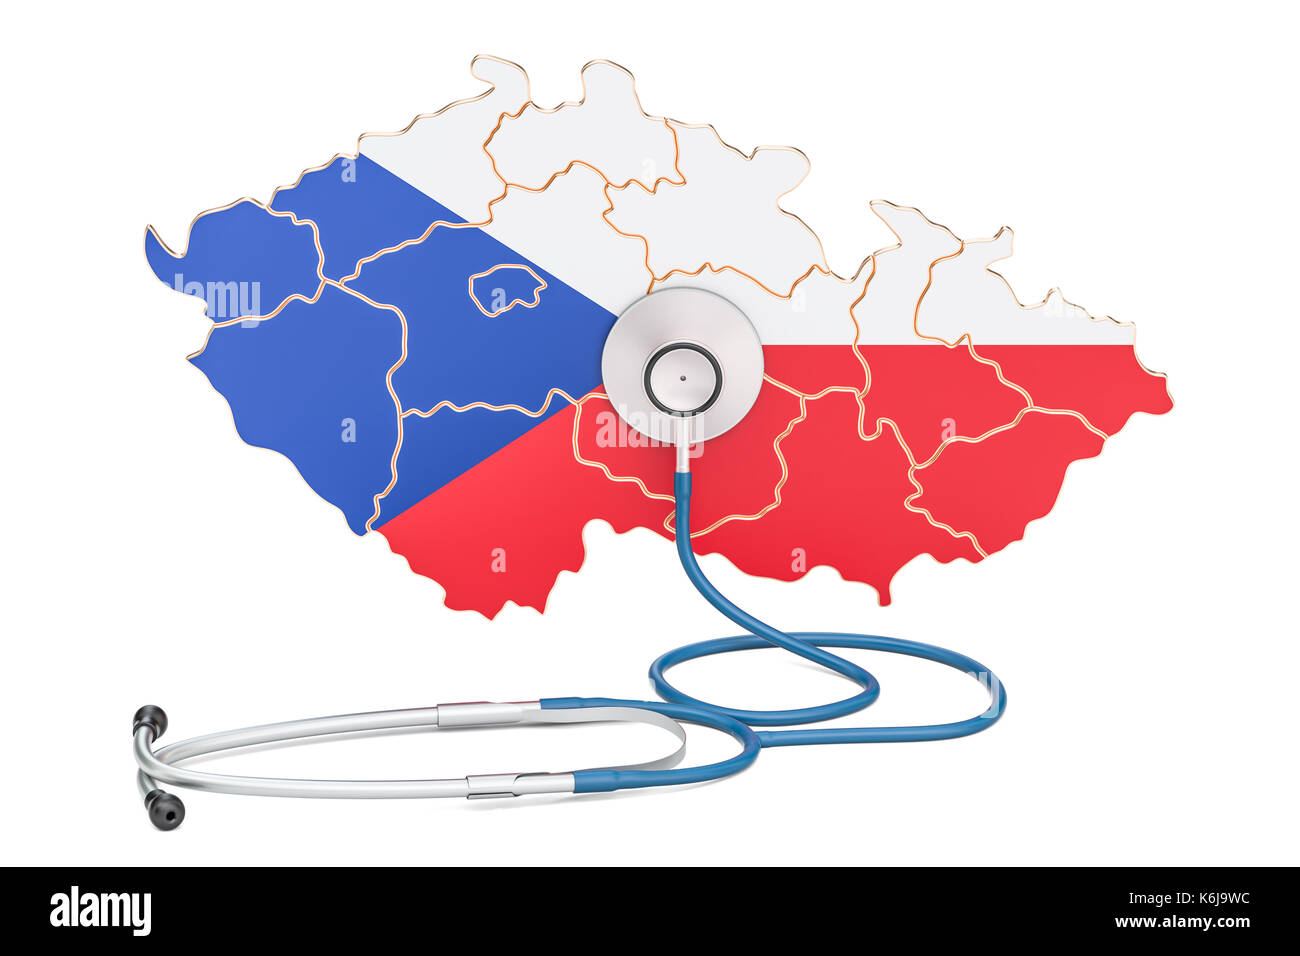 Tschechische Republik Karte mit Stethoskop, national Health Care Concept, 3D-Rendering Stockfoto